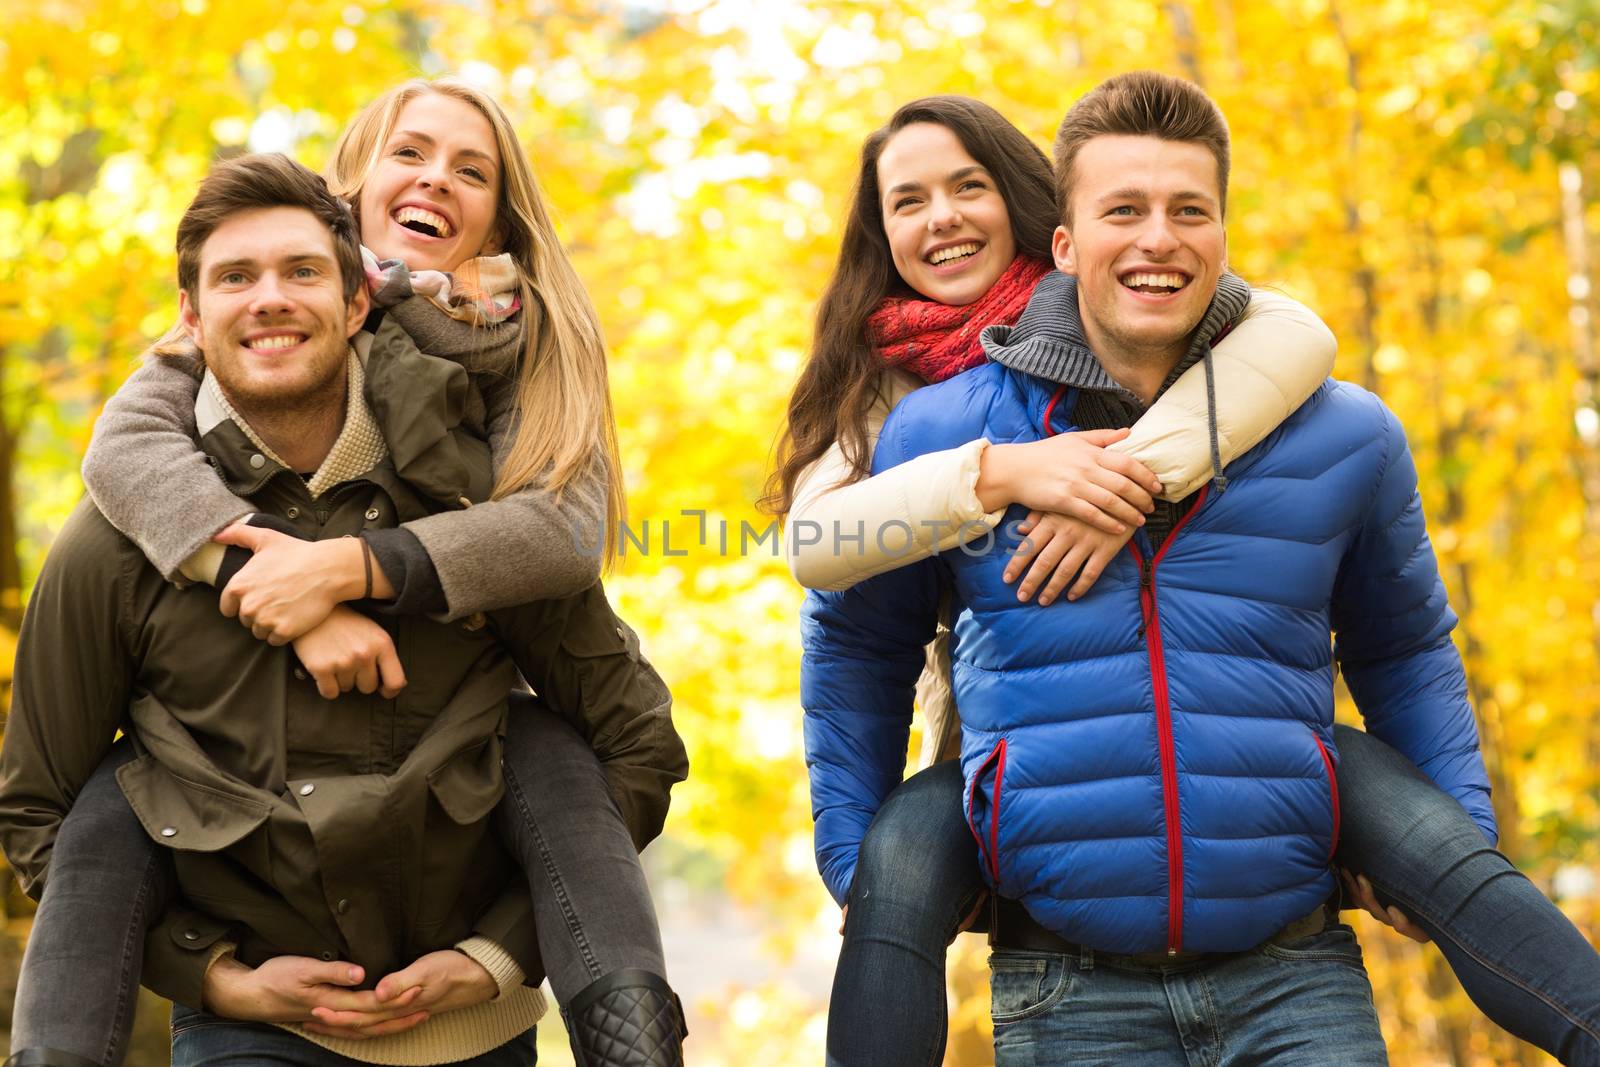 smiling friends having fun in autumn park by dolgachov